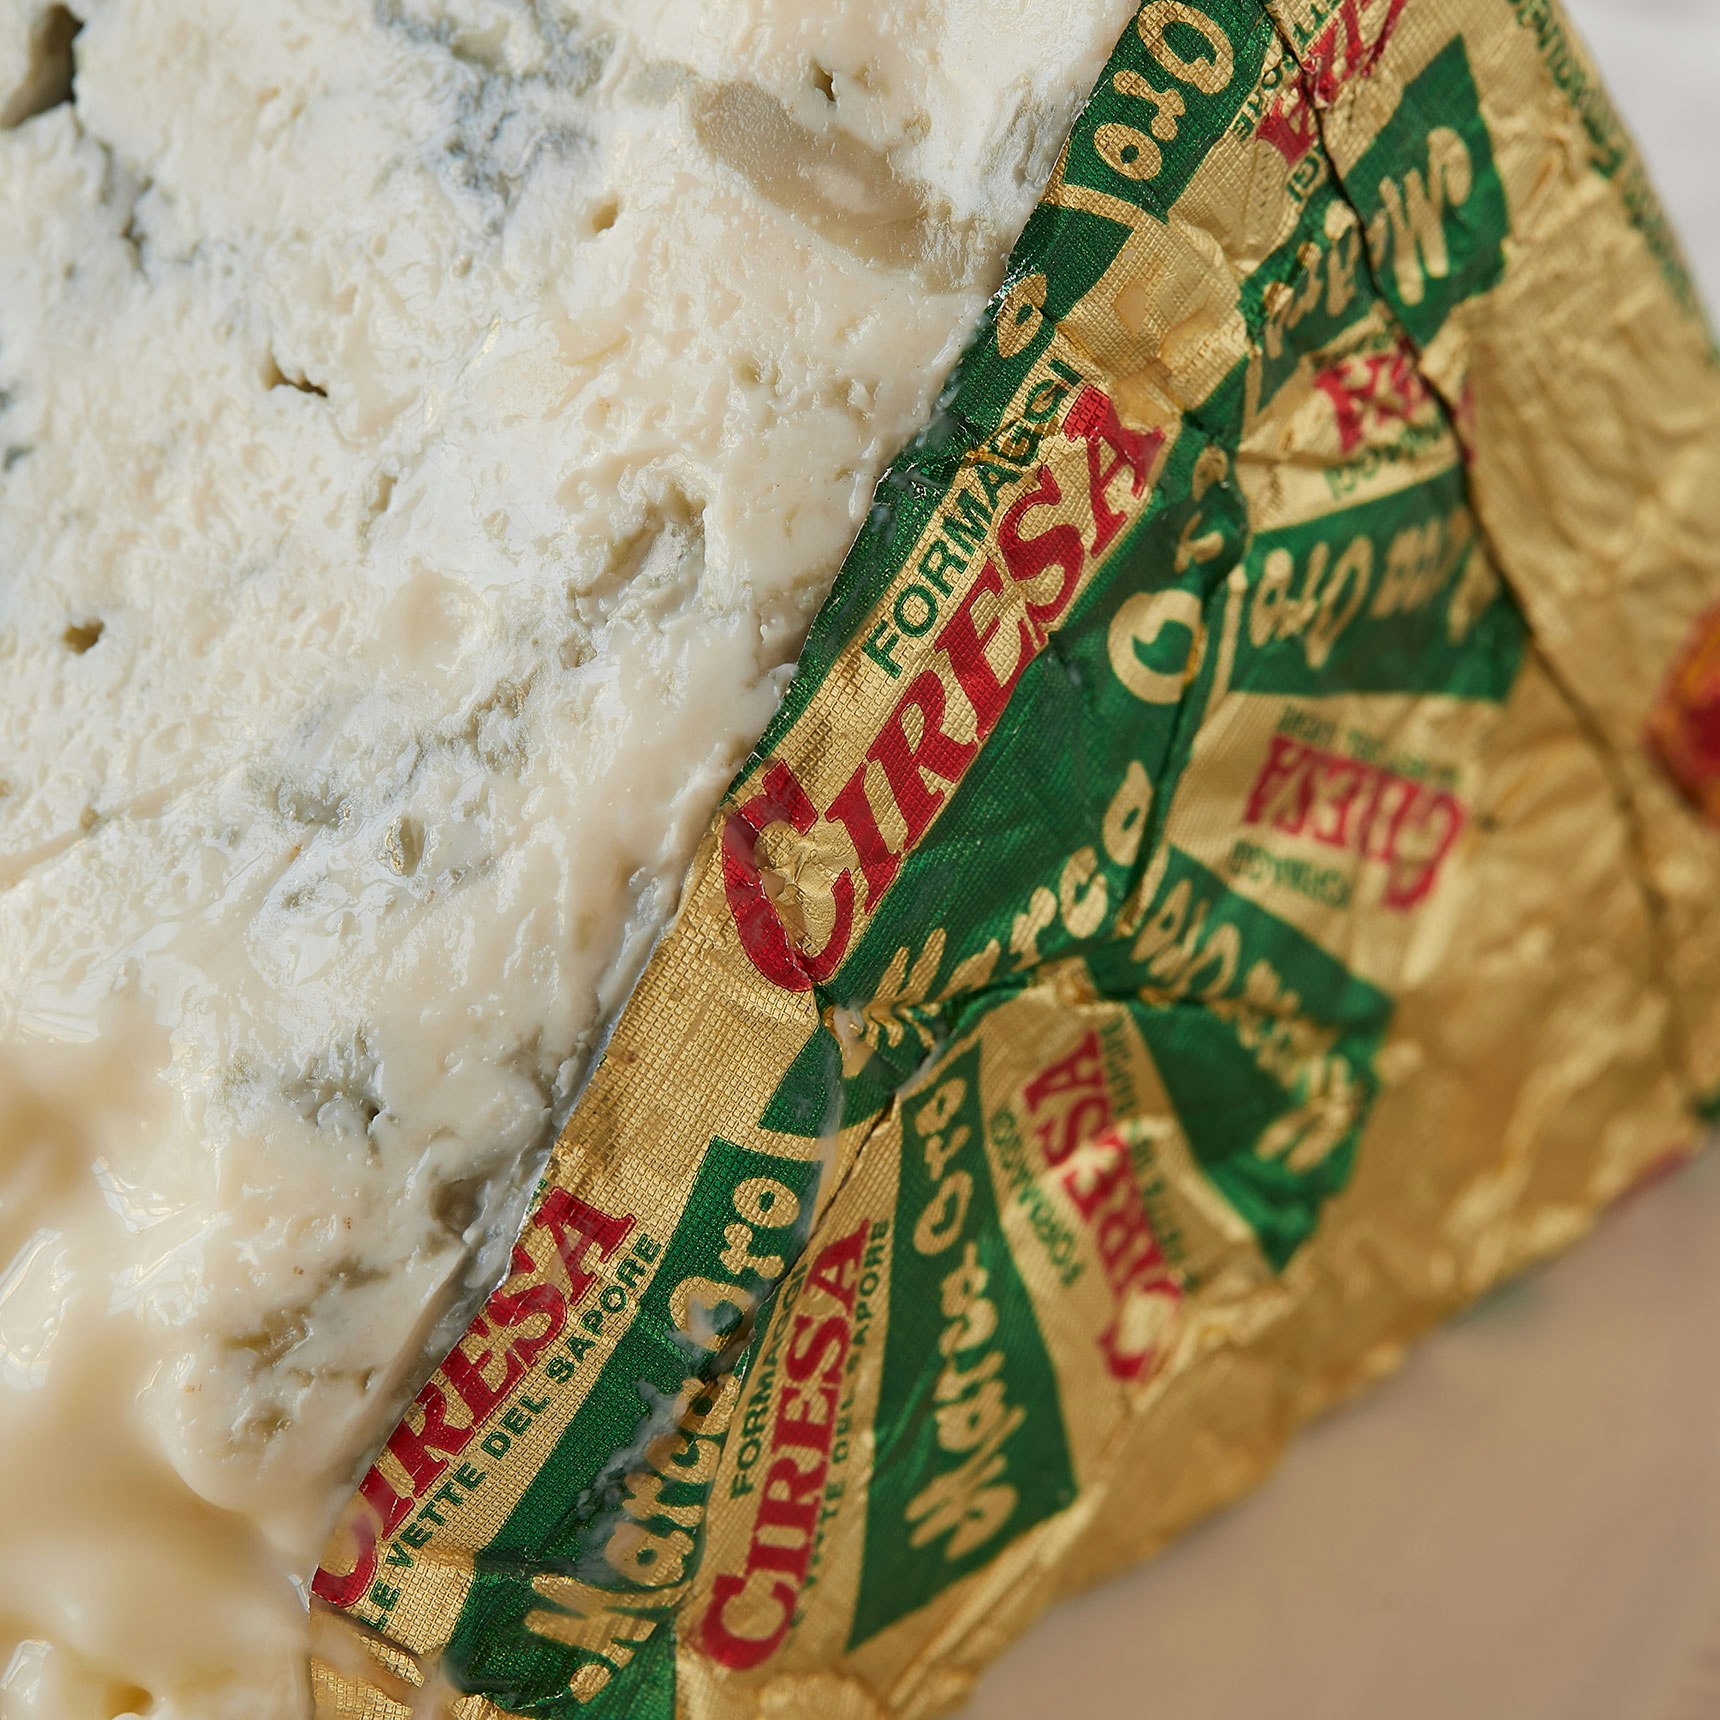 gorgonzola cremificato cheese